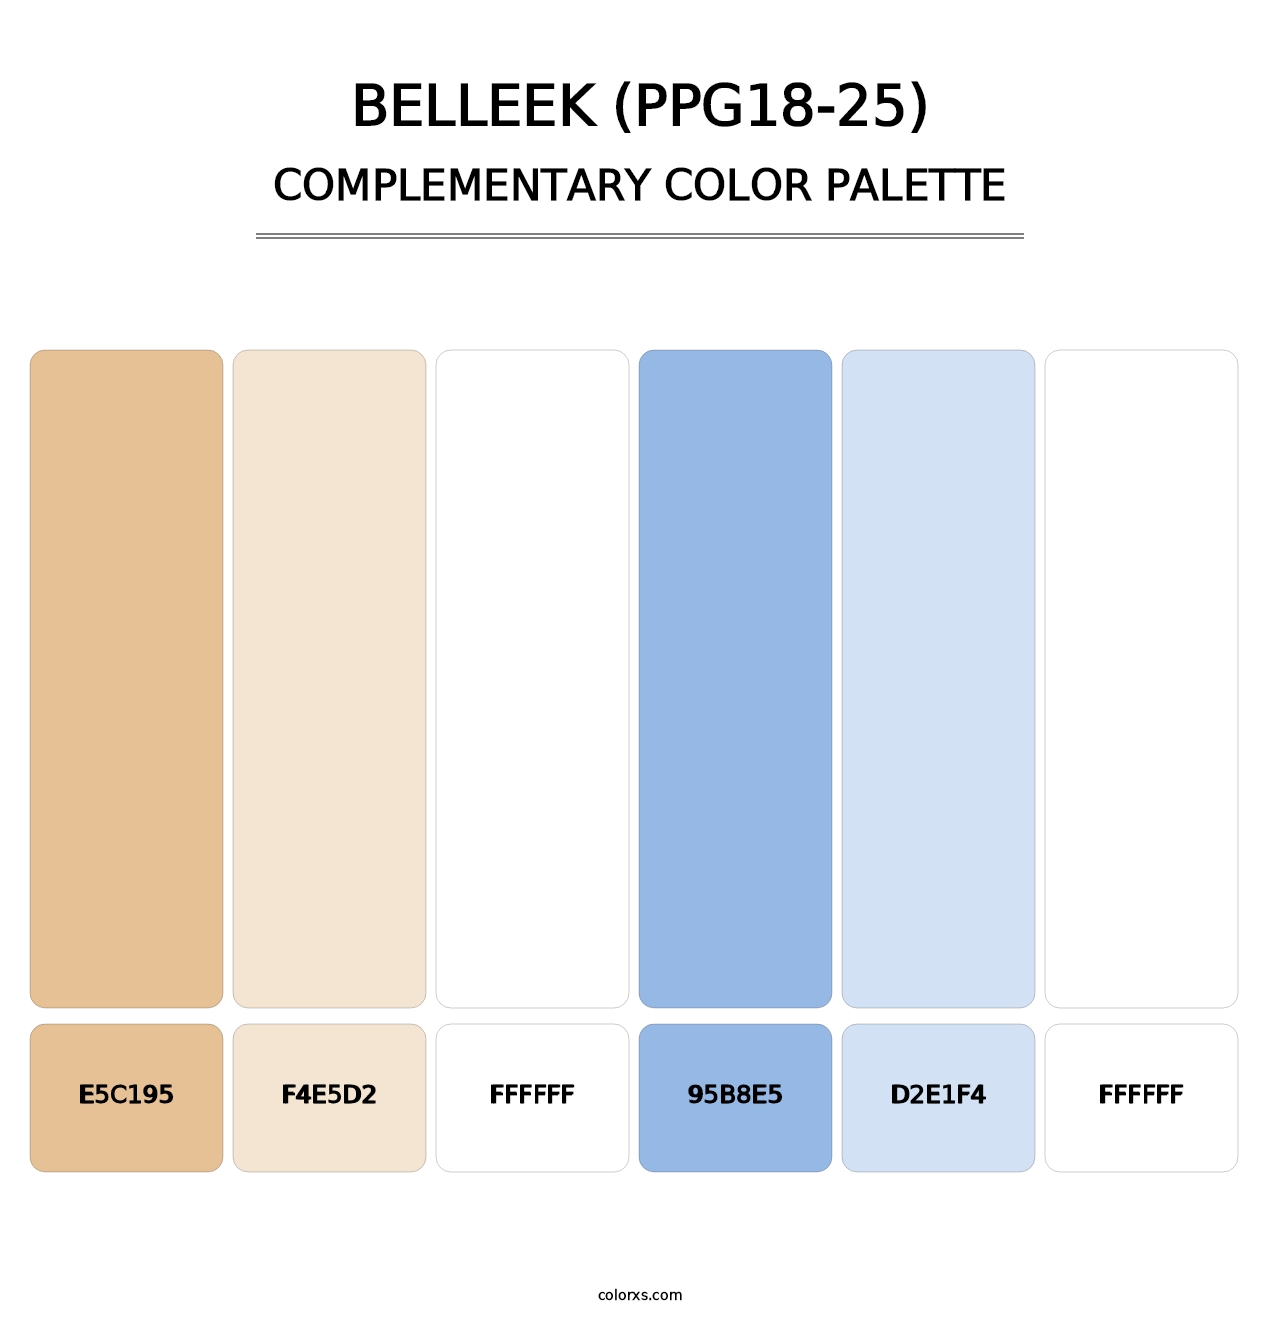 Belleek (PPG18-25) - Complementary Color Palette